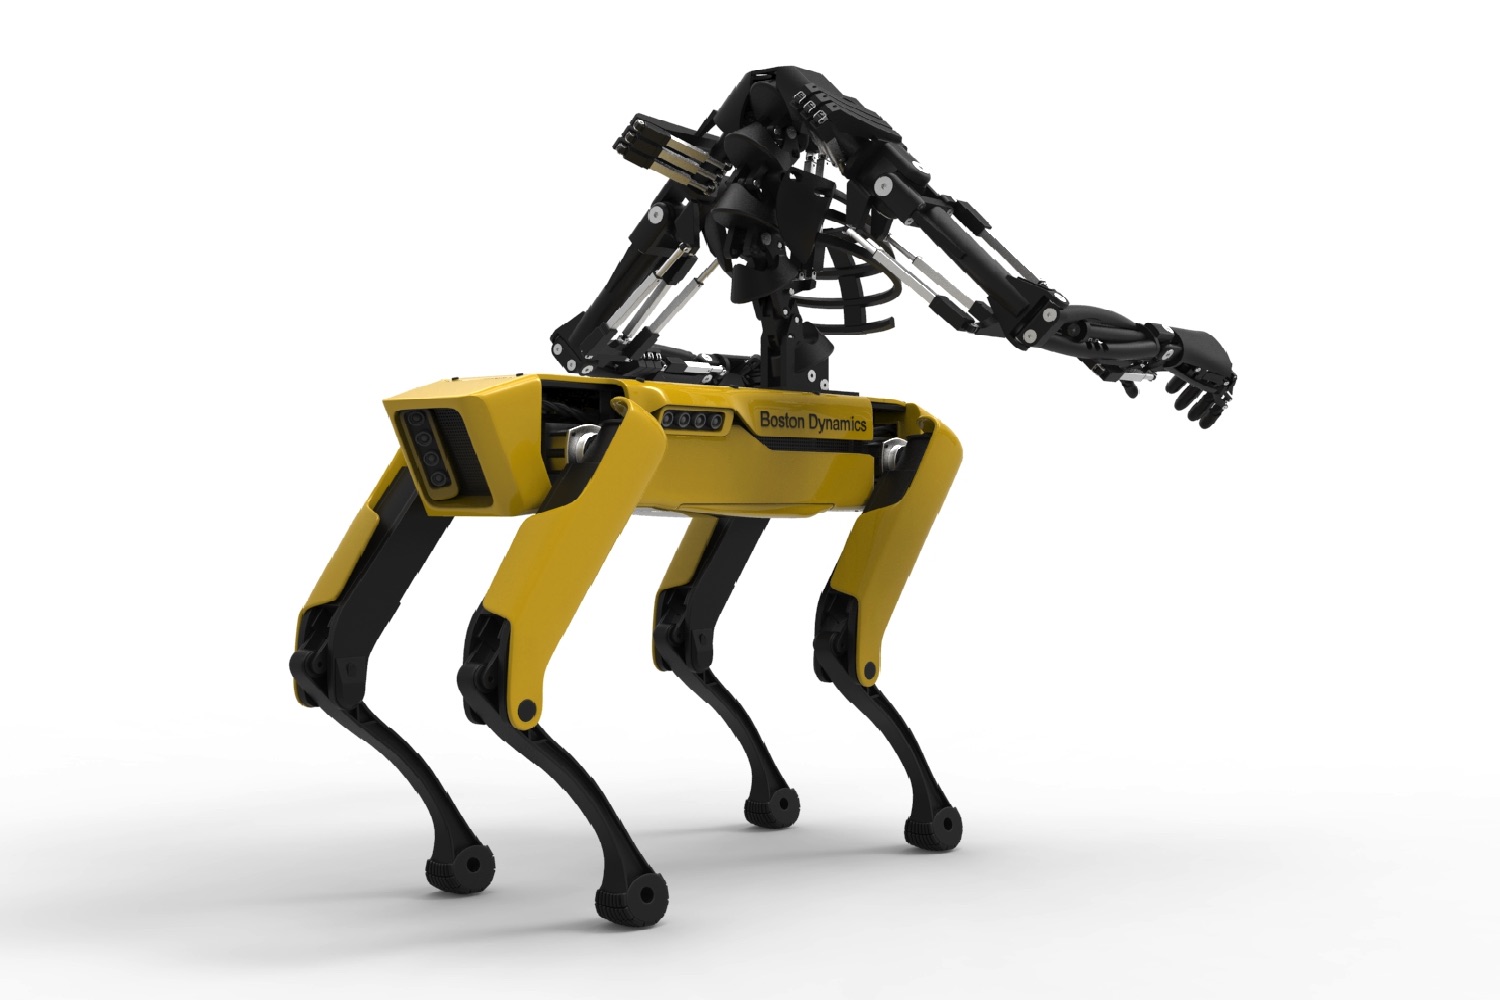 centaur robot youbionic spotmini cyber 5